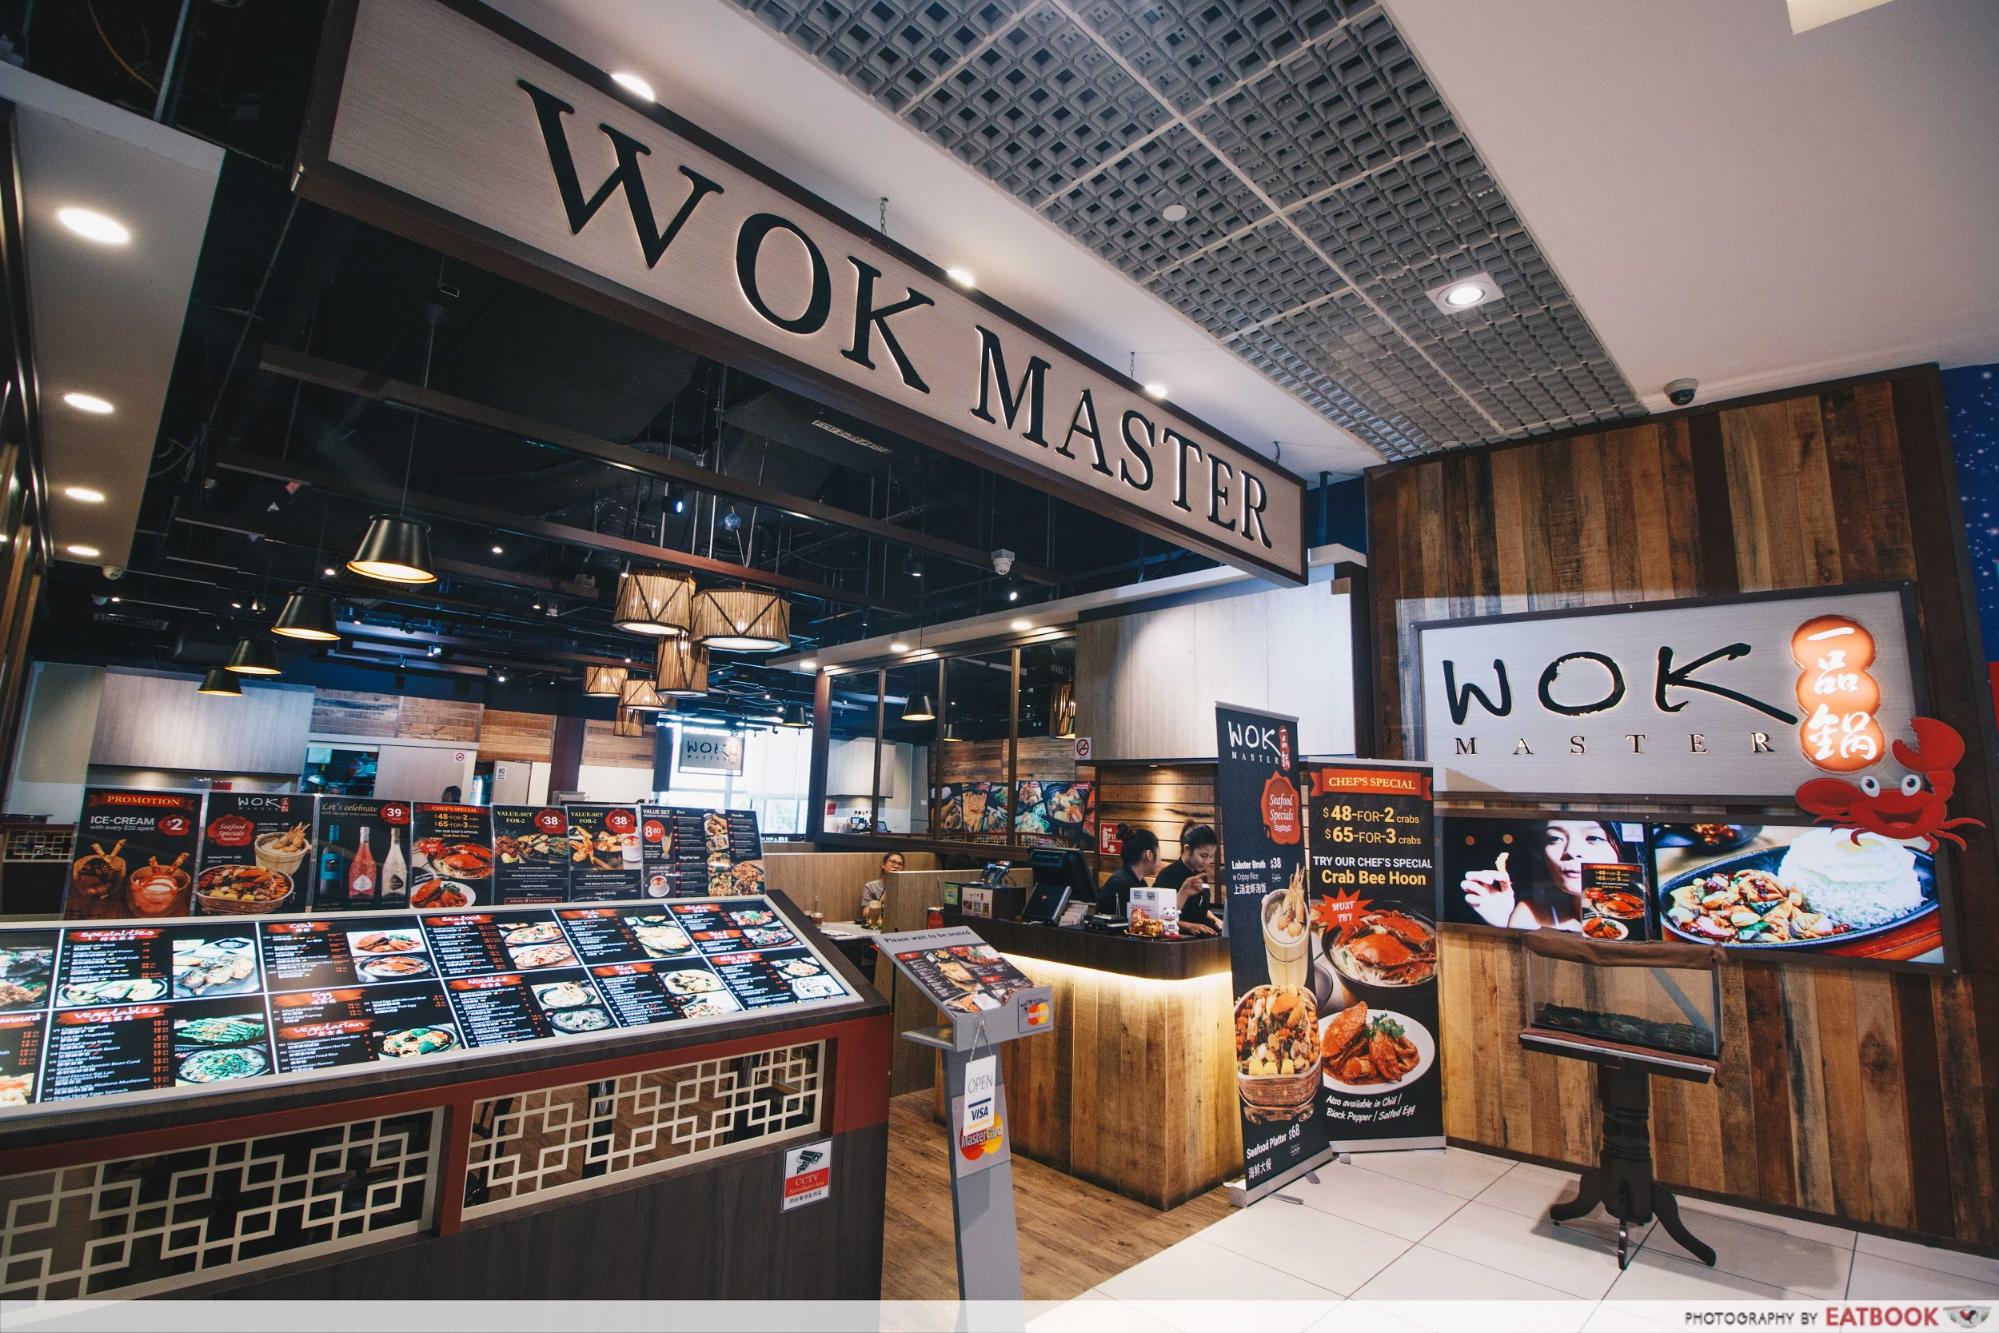 New New Restaurant City Square Mall - Wok Master City Square Mall - Wok Master